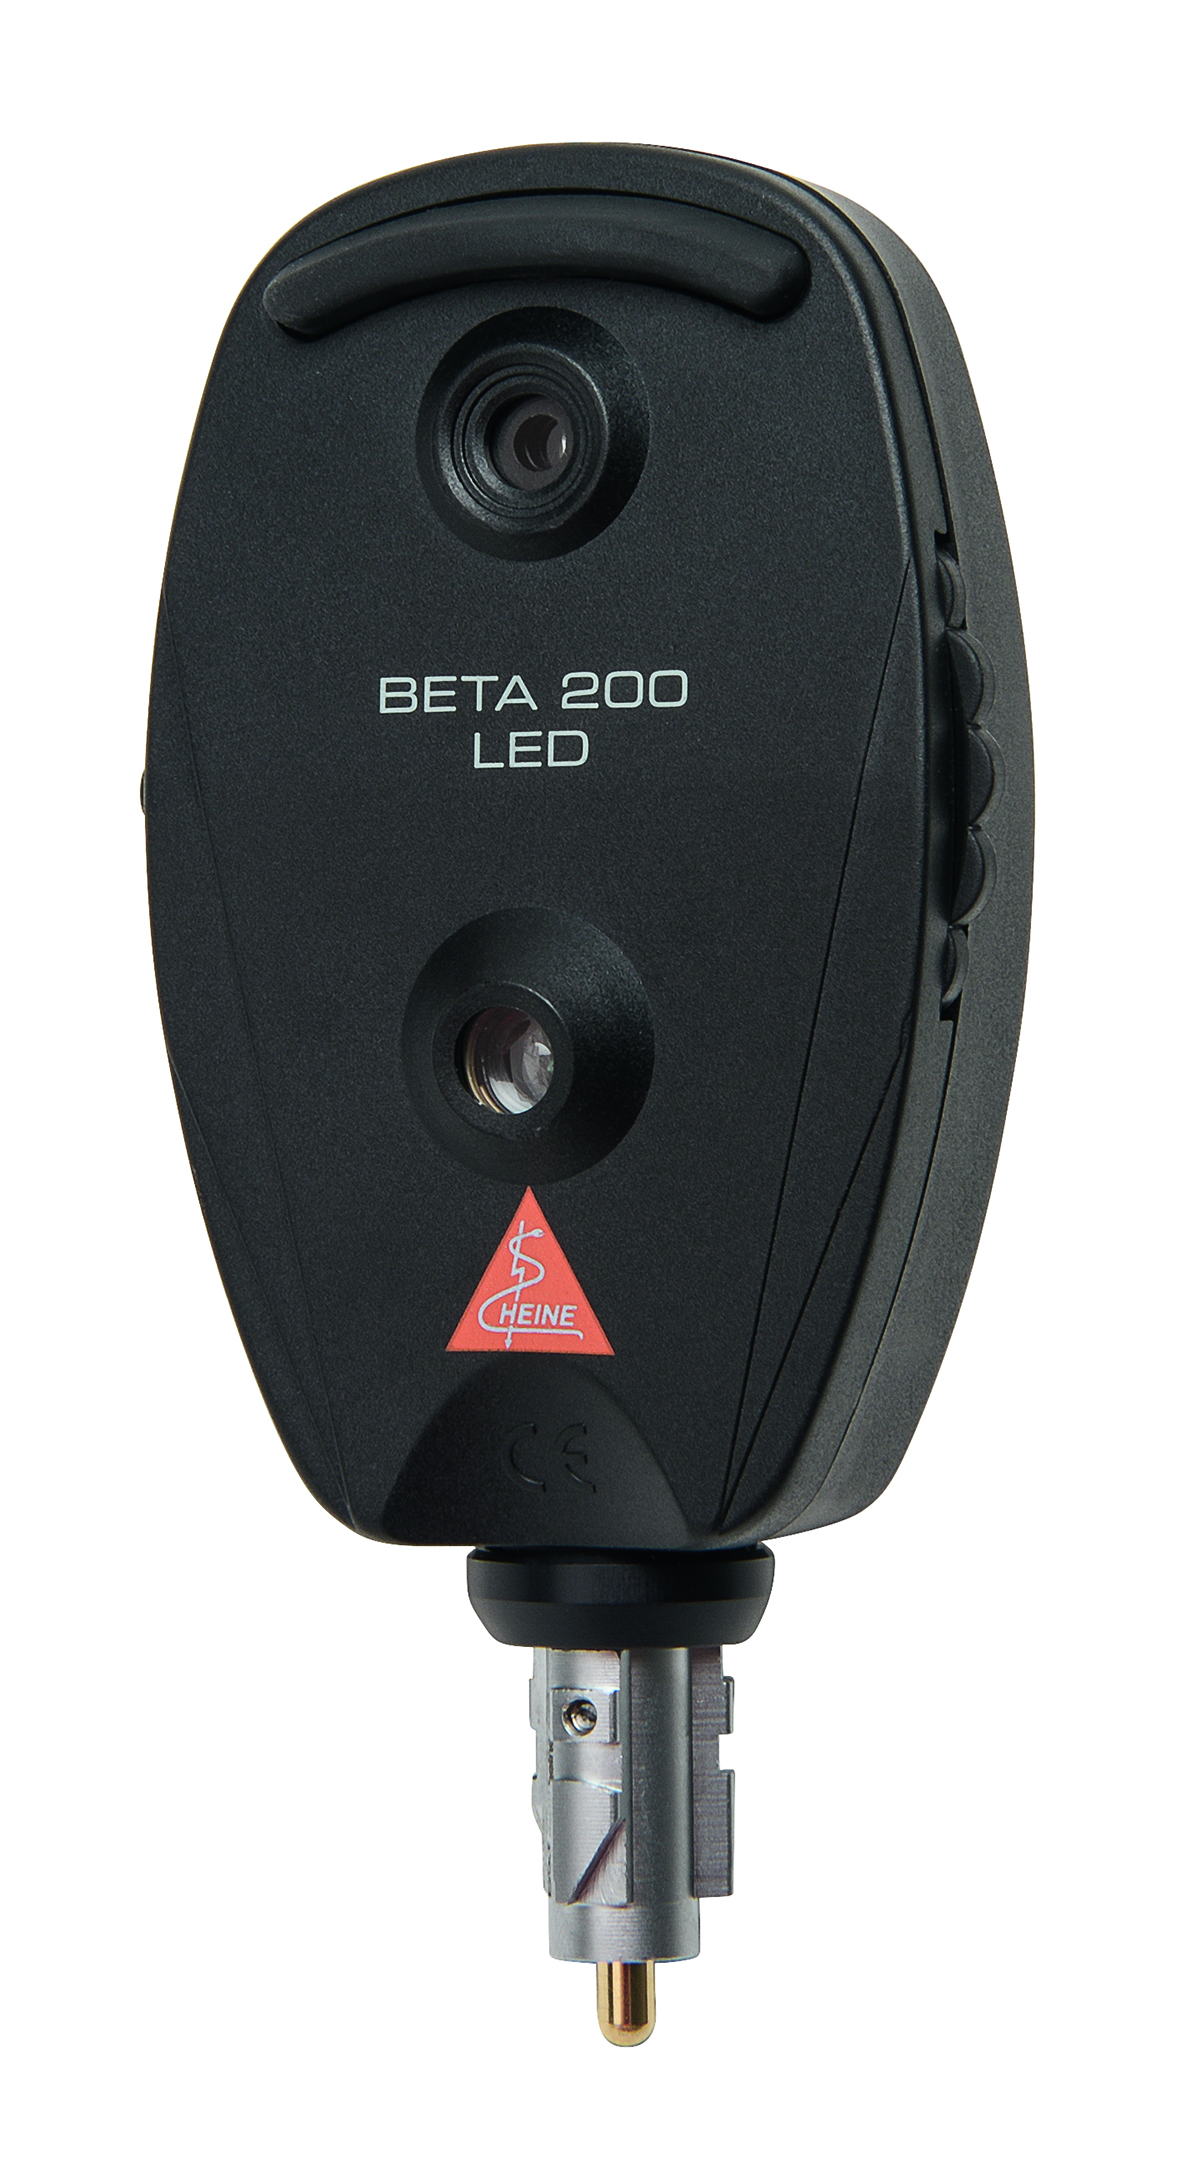 Heine ophthalmoscoopkop Beta 200 - 3,5 V - led